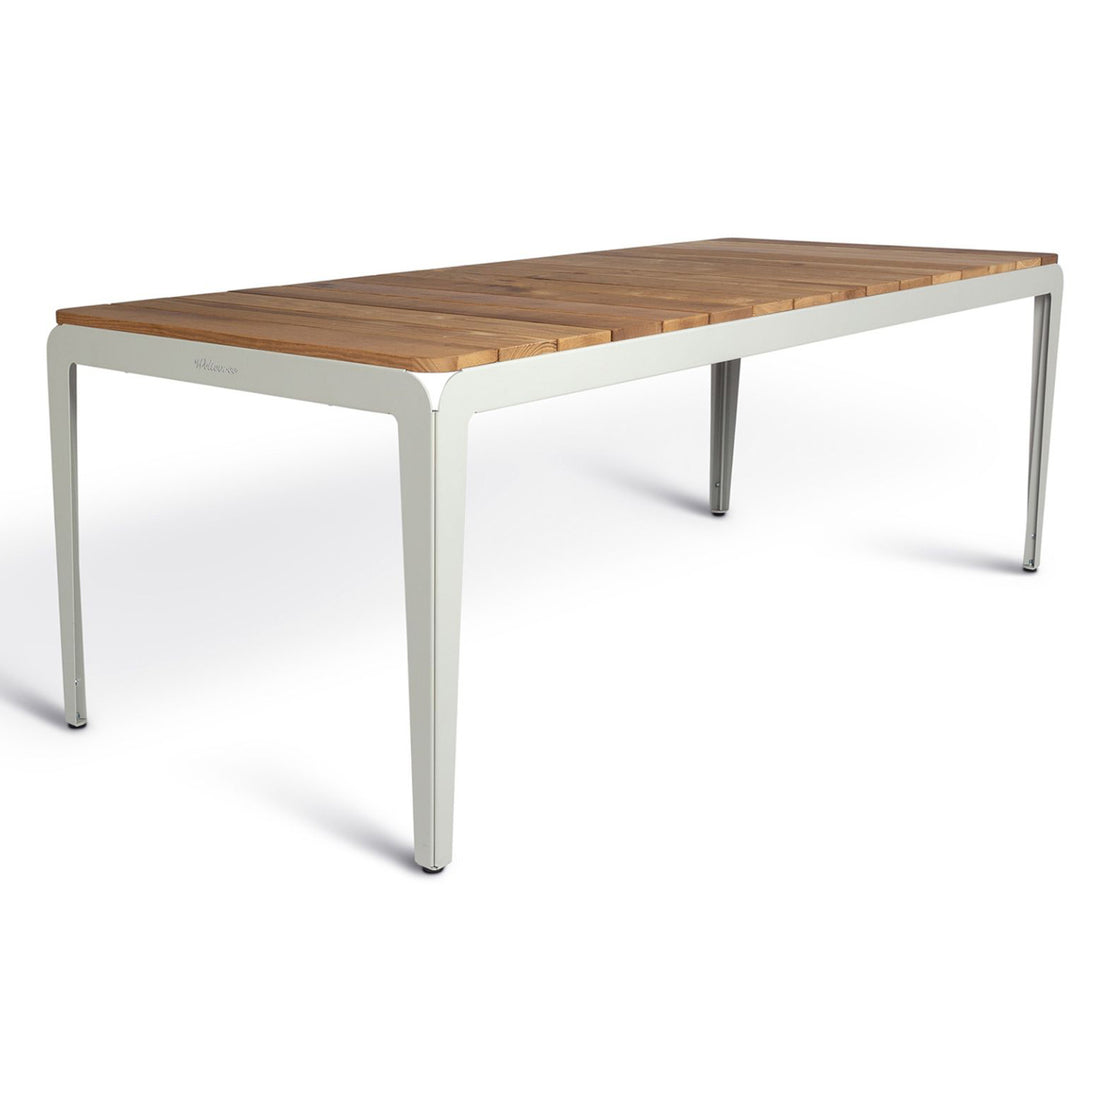 Weltevree Bended Table wood